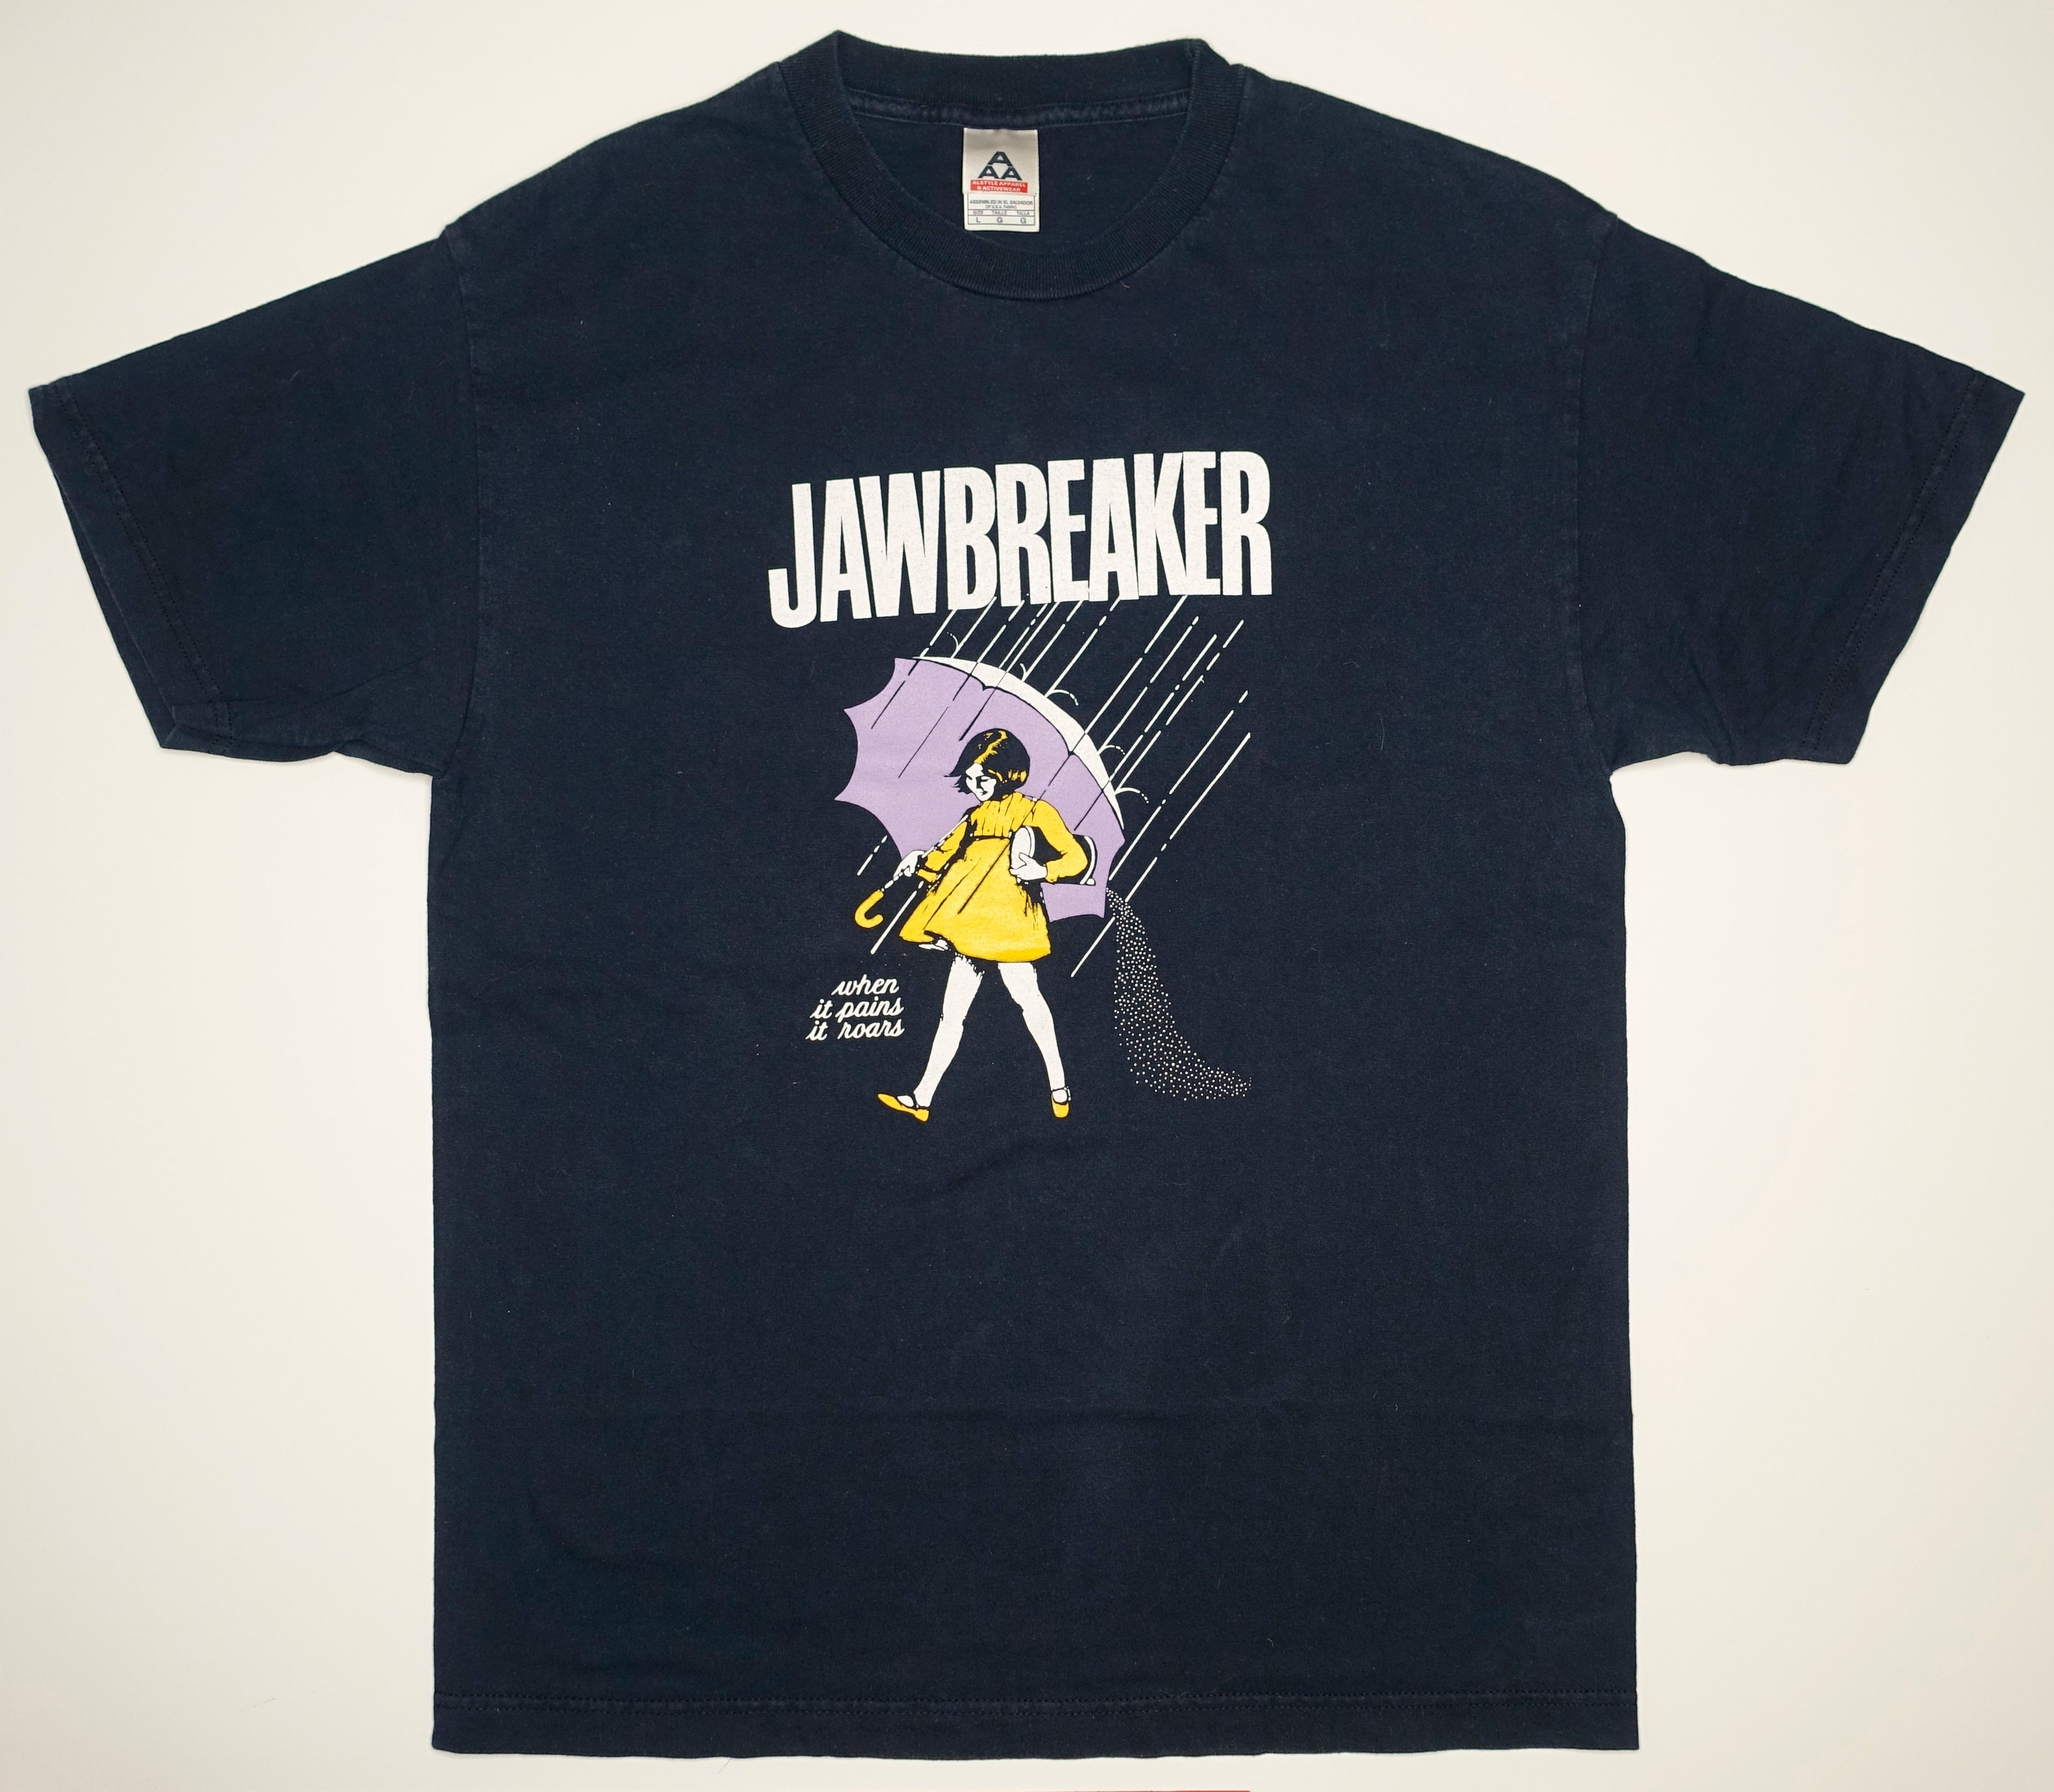 Jawbreaker - When It Pains Its Roars Tour Shirt Size Large